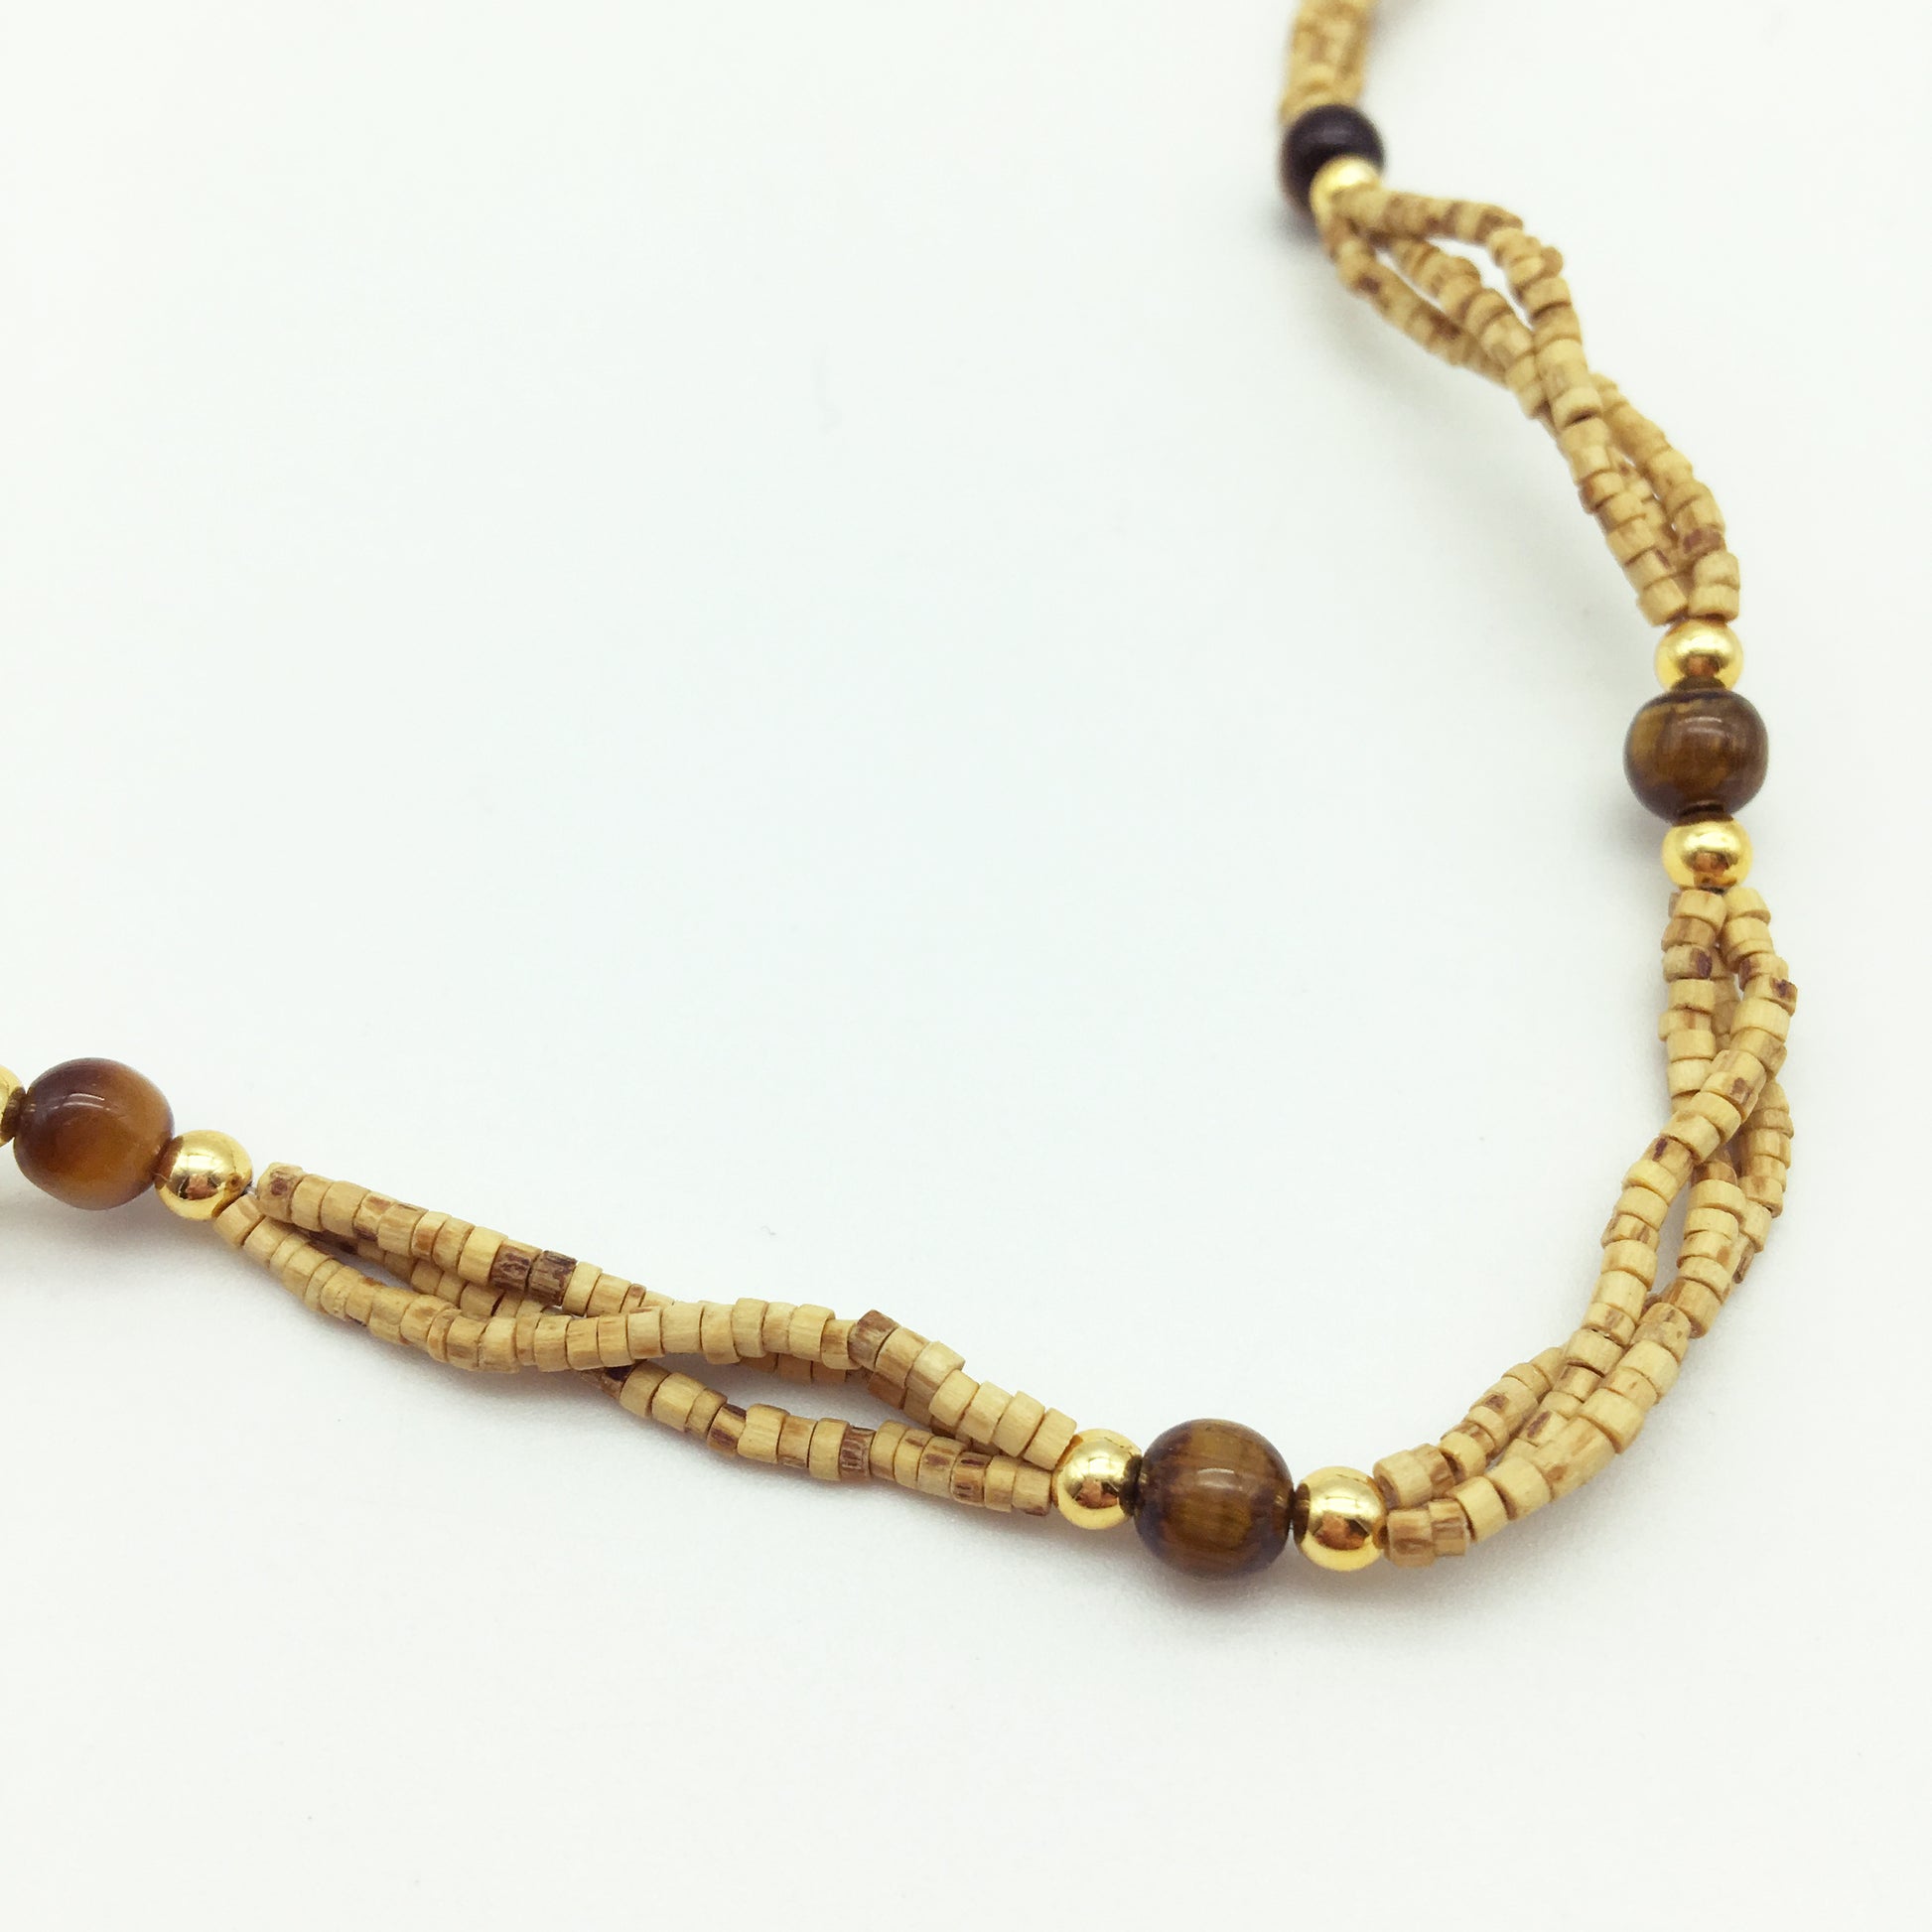 Tulsi Tulasi Necklace 100% Pure Tulsi with Semi Precious Stones - Tiger Eye - Montecinos Ethnic